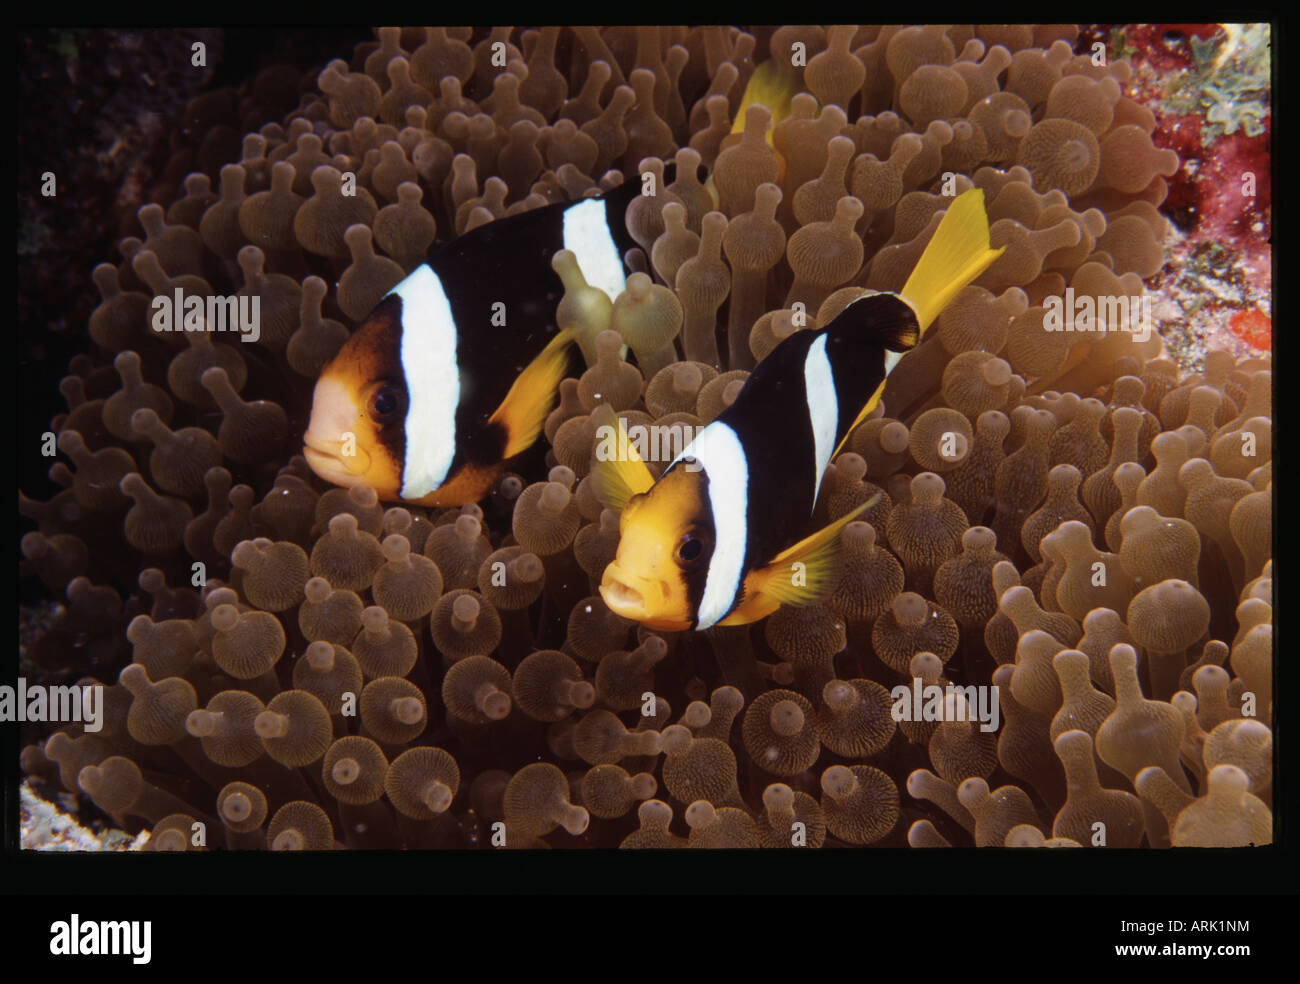 Two Clark's anemonefish (Amphiprion clarkii) with sea anemones underwater Stock Photo